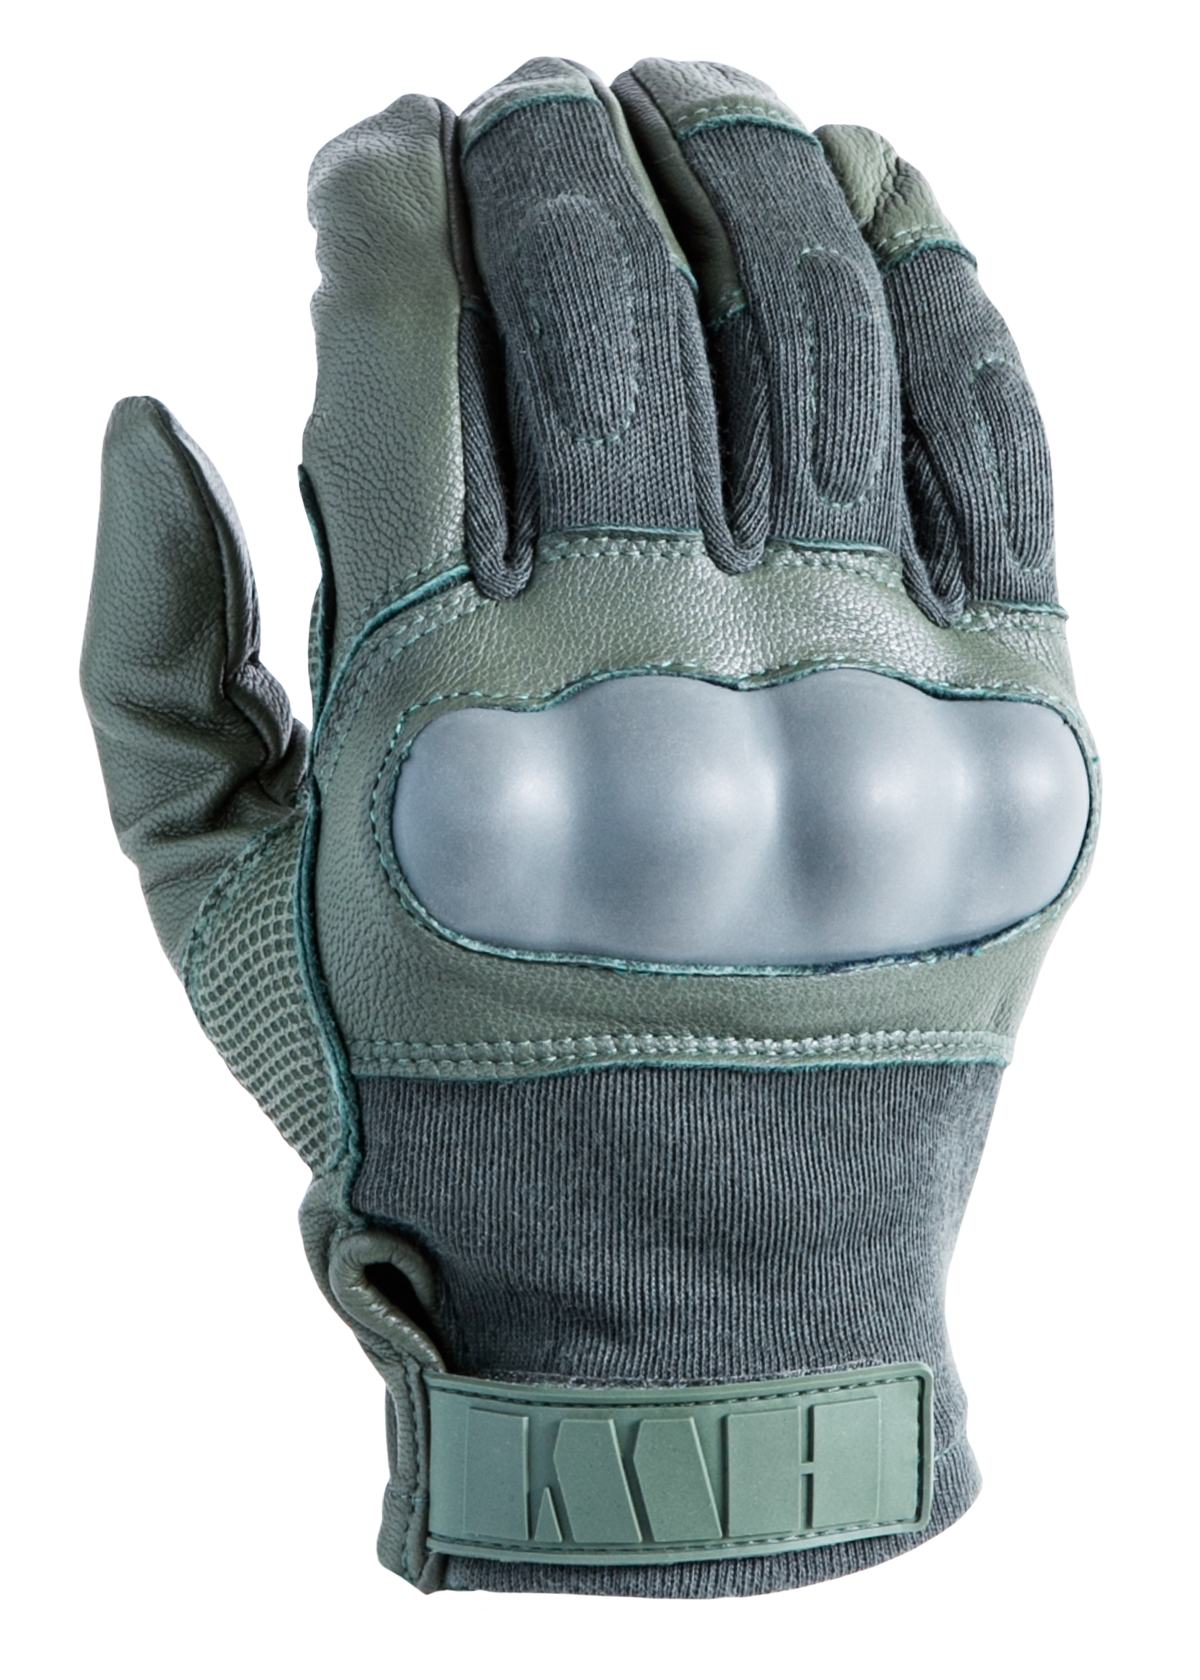 Hard Knuckle Tactical Fire Resistant Glove - HKTG100/200/300 | HWI GEAR -  Tactical Gloves & Duty Gear